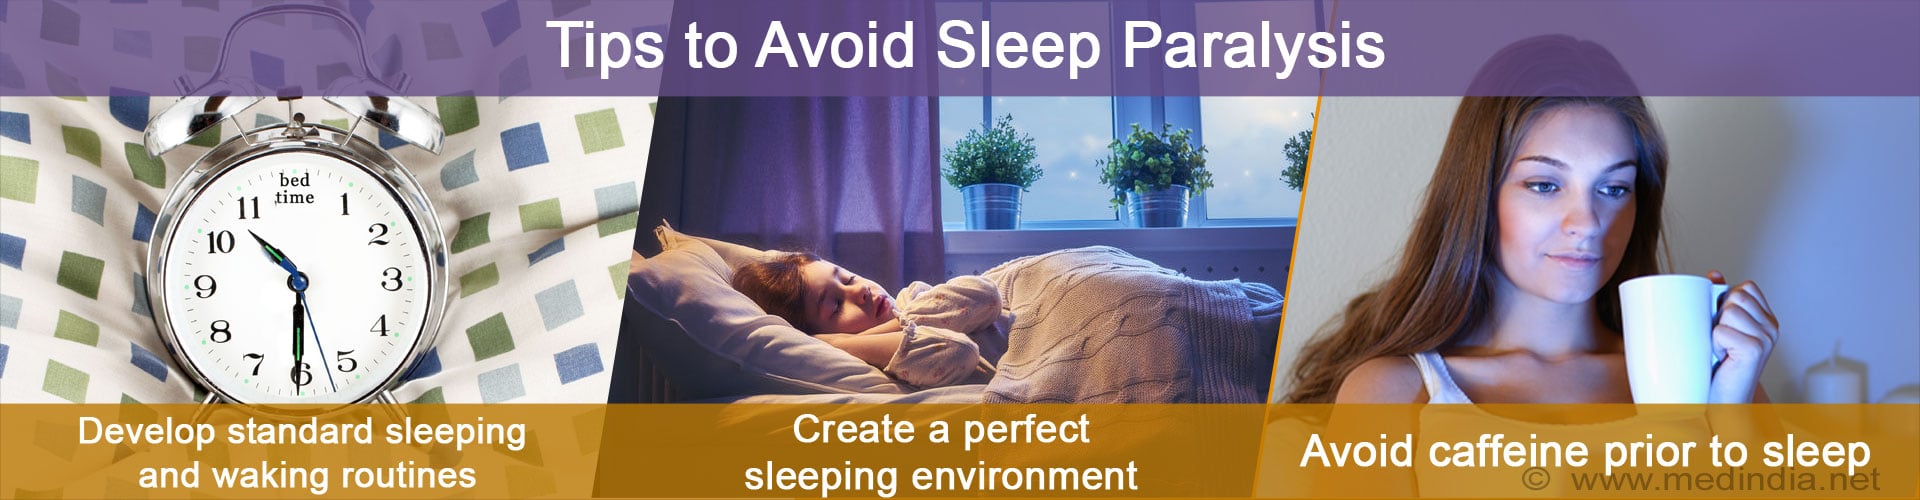 Tips to Avoid Sleep Paralysis
- Develop standard sleeping and waking routine
- Create a perfect sleeping environment
- Avoid caffeine prior to sleep